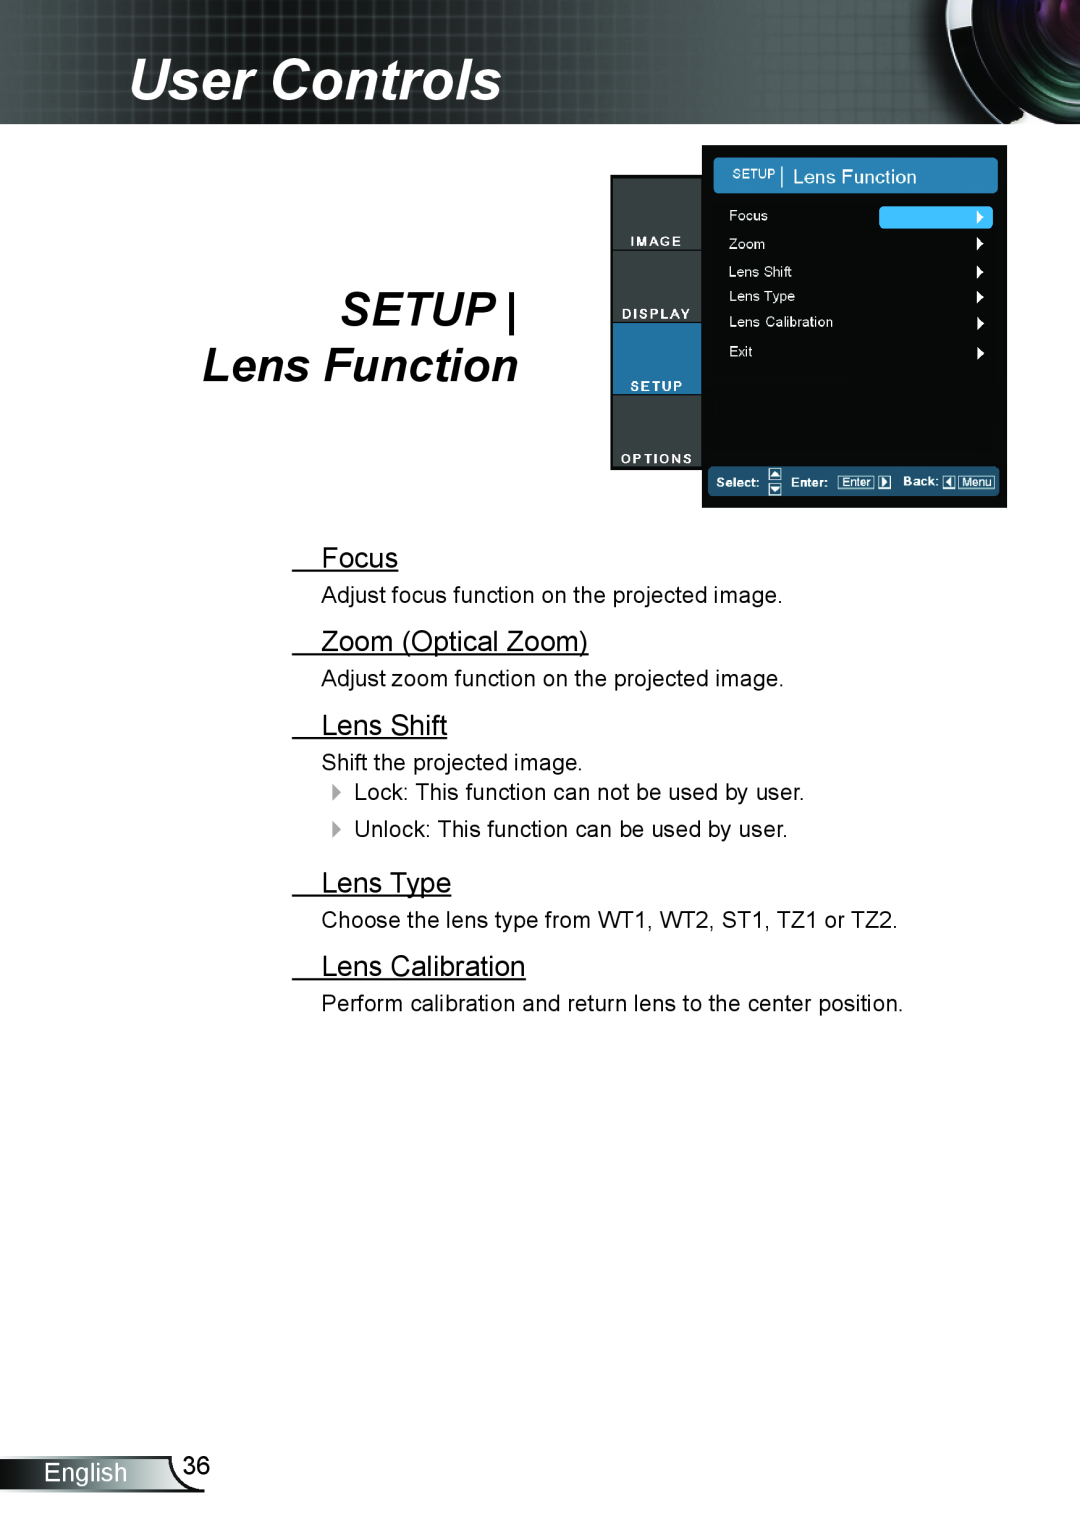 Optoma Technology TH7500NL SETUP Lens Function, Focus, Zoom Optical Zoom, Lens Shift, Lens Type, Lens Calibration, English 